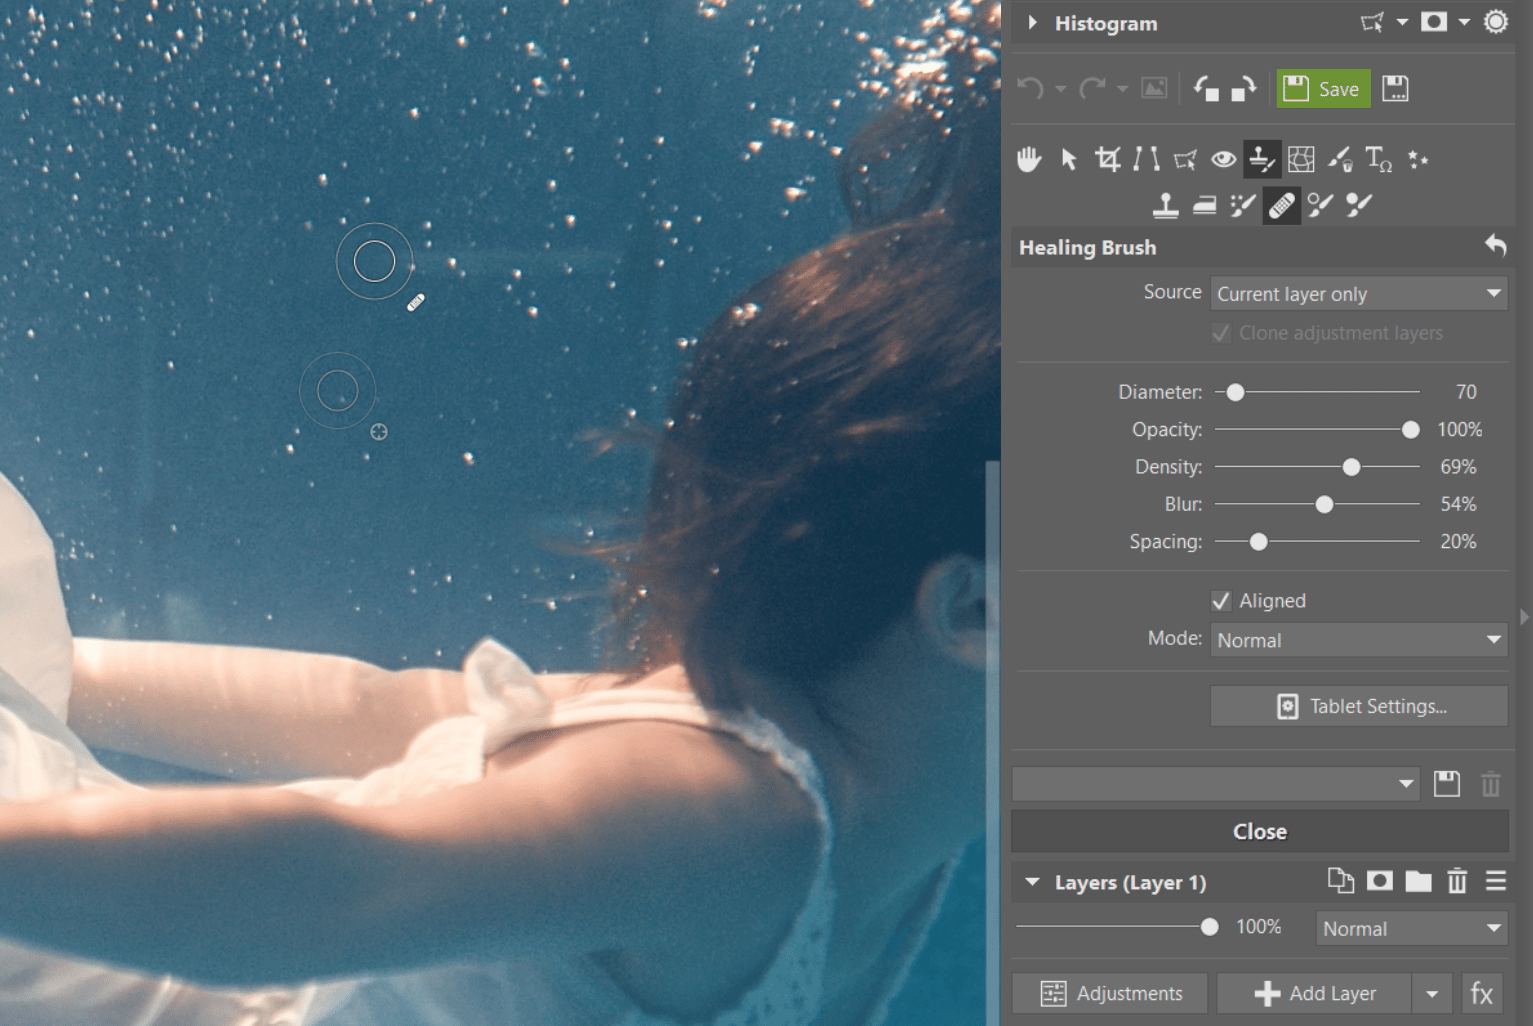 How to Brighten up Your Underwater Photos